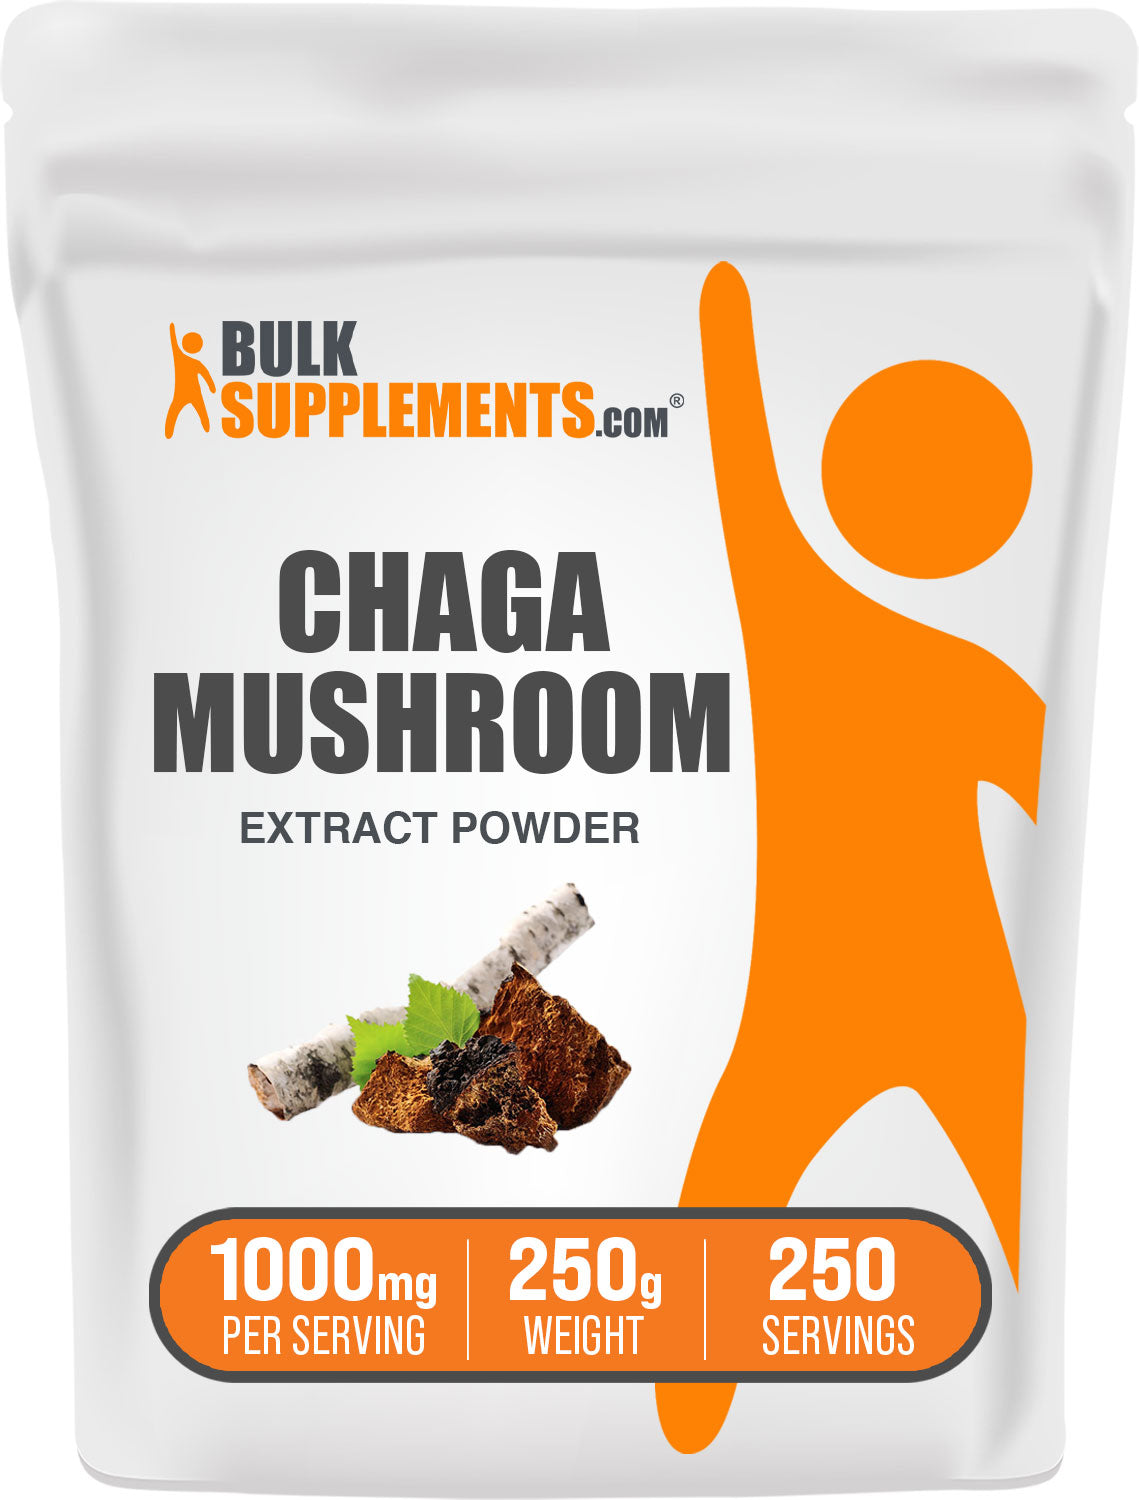 250g of chaga mushroom supplement